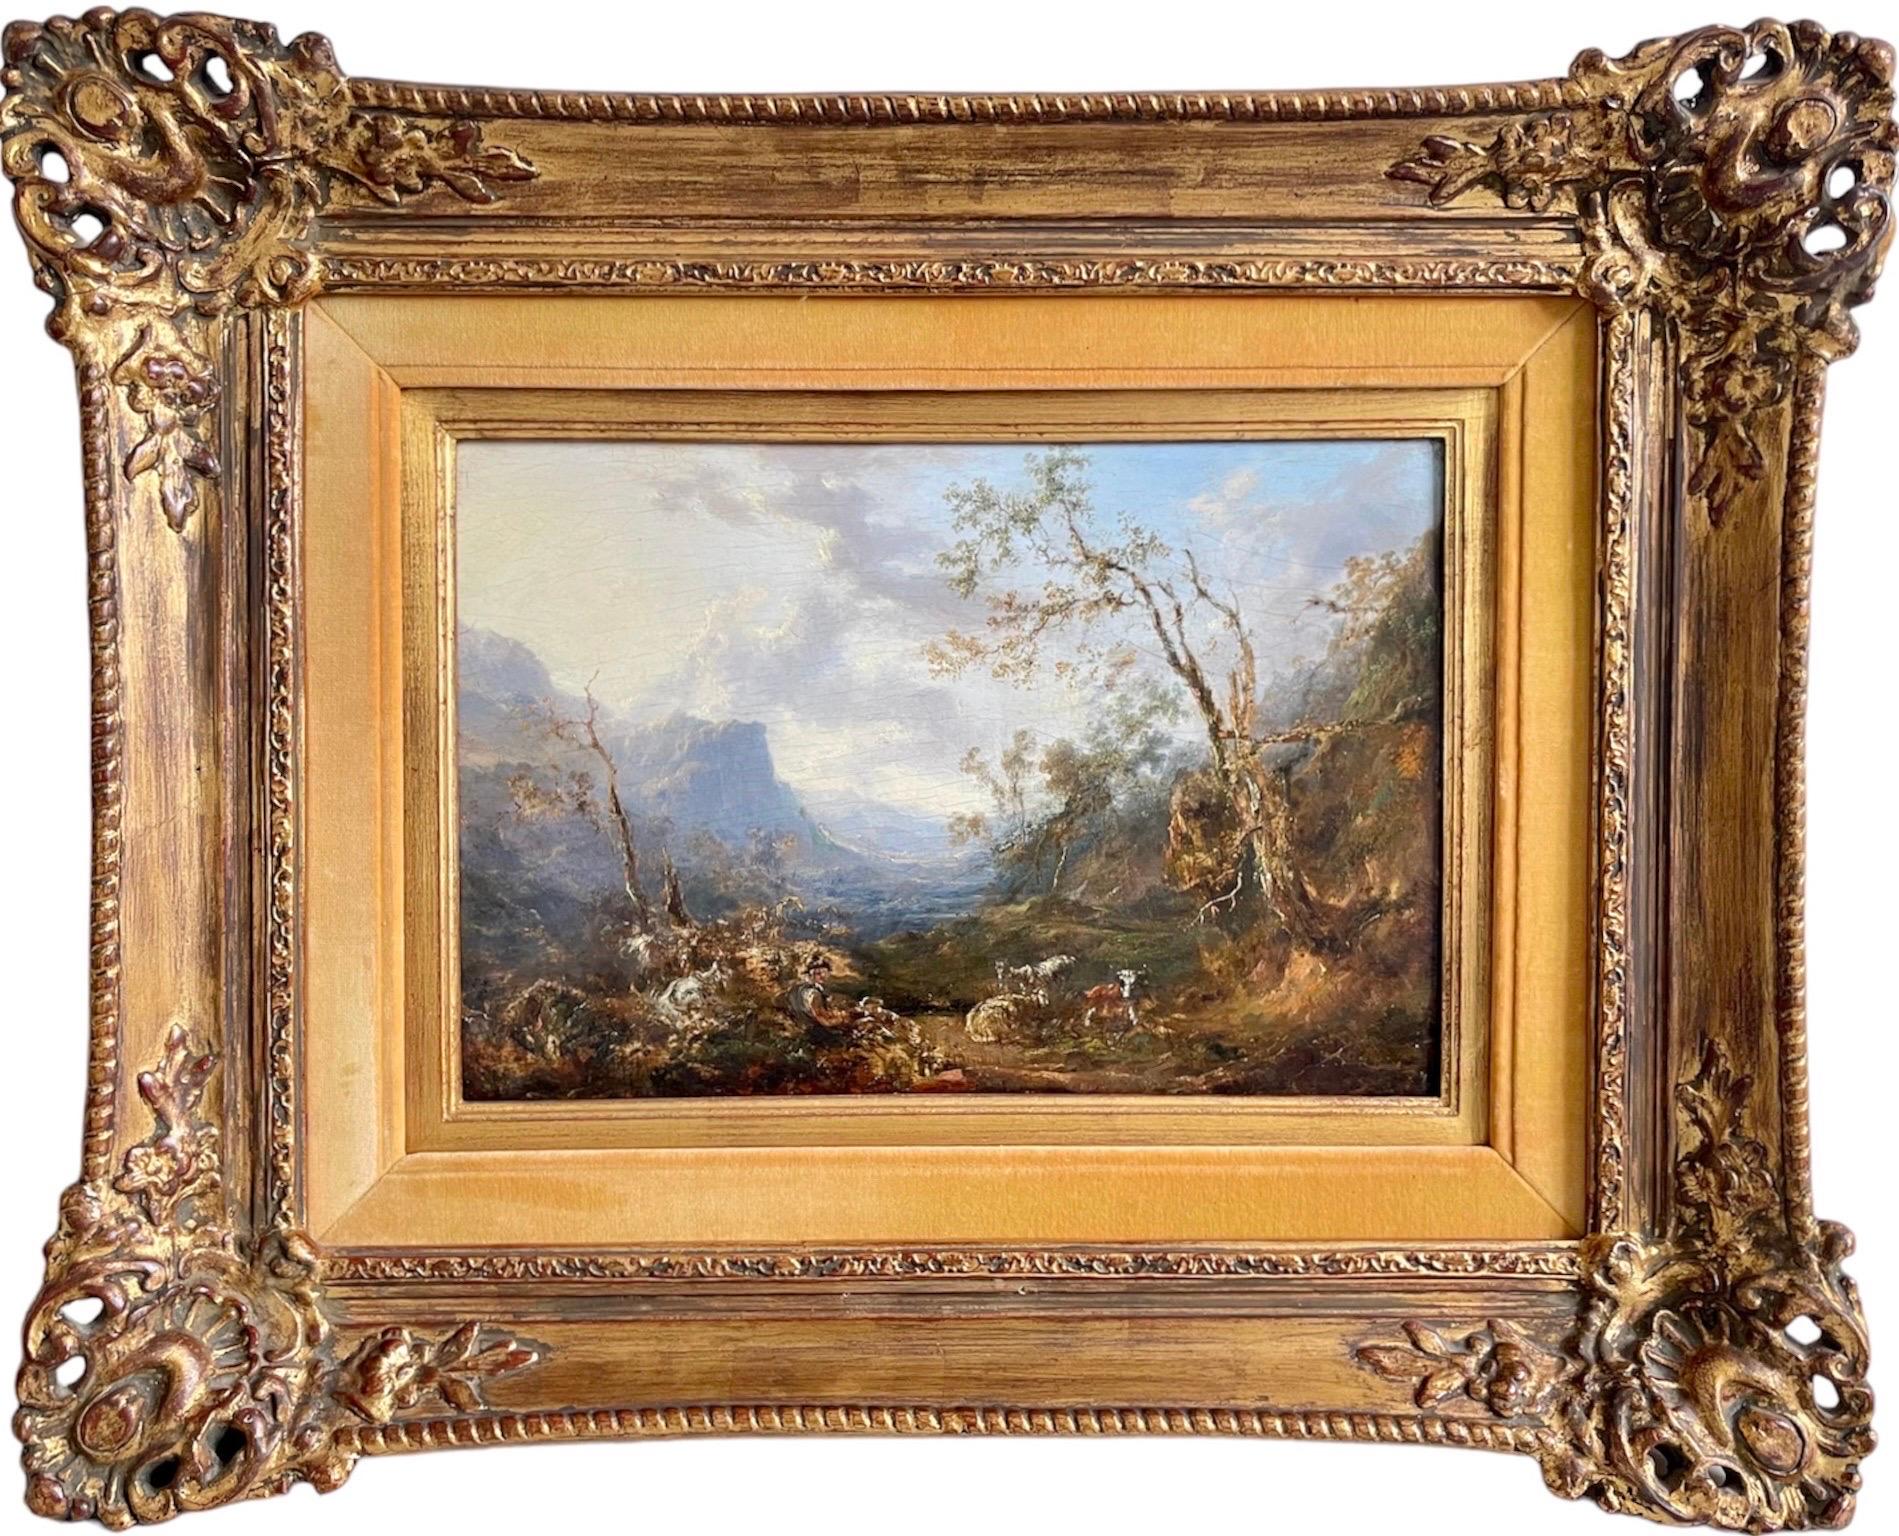 Samuel Williamson Landscape Painting - 19th century Victorian oil landscape - Summer in the Highlands - Sunset